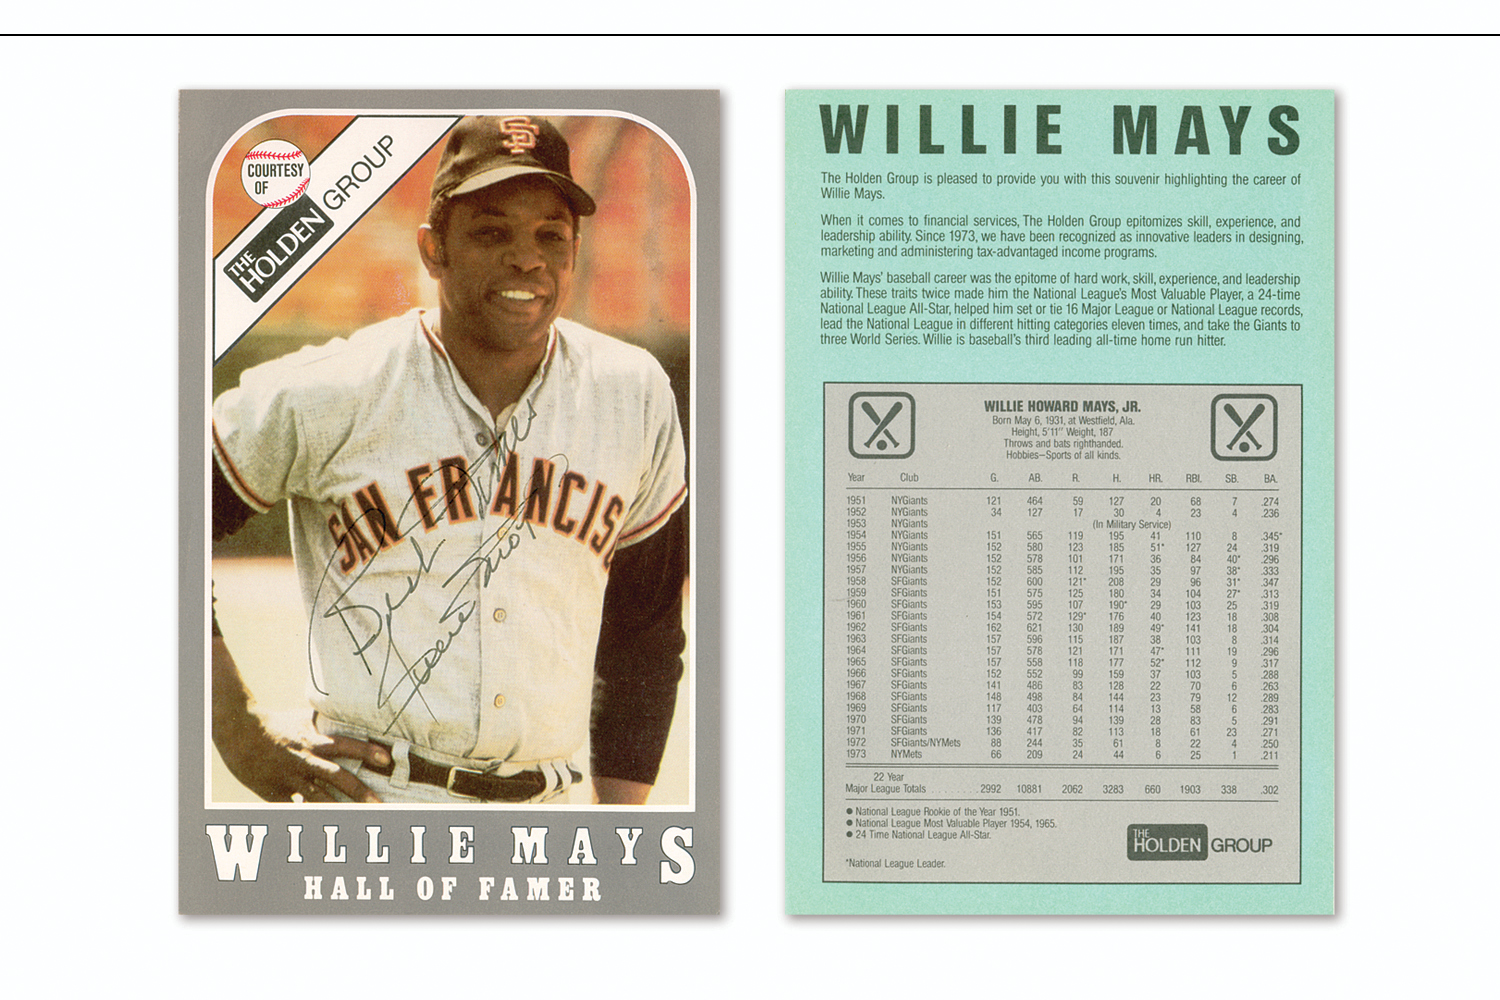   Promotional Baseball Card,   Trade show handout  